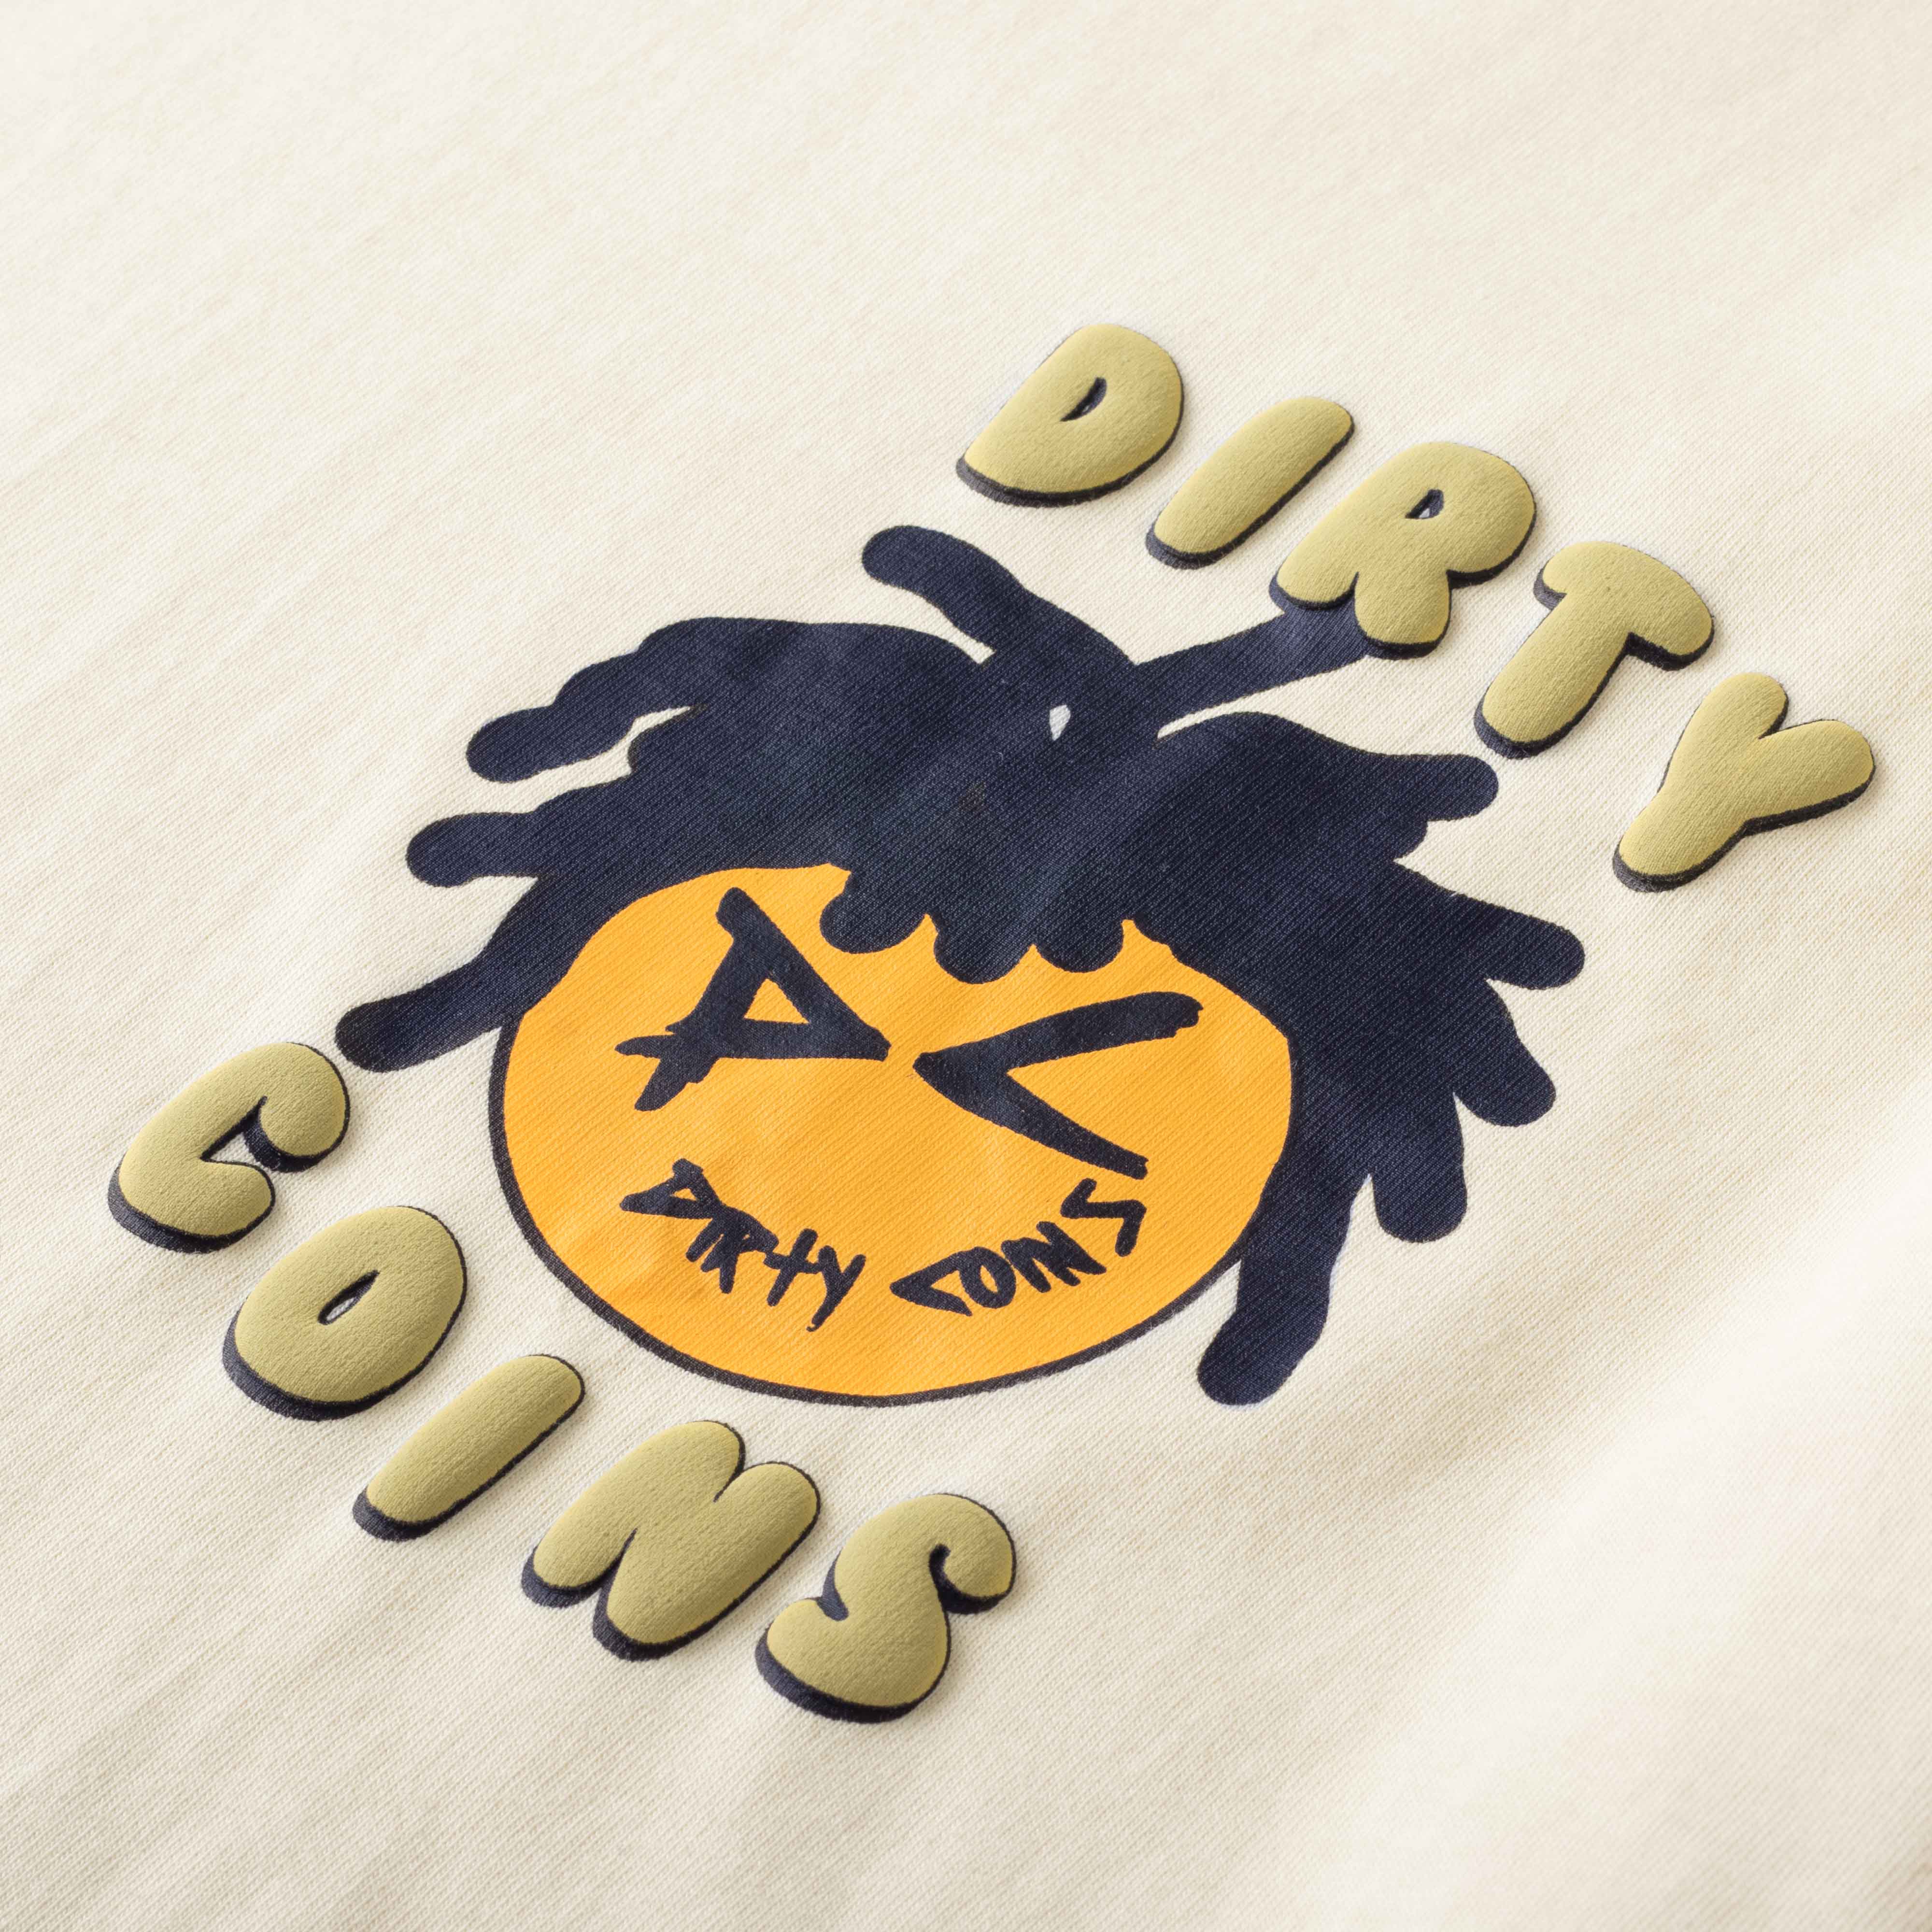 DirtyCoins x LilWuyn Hiphop T-Shirt - Cream White